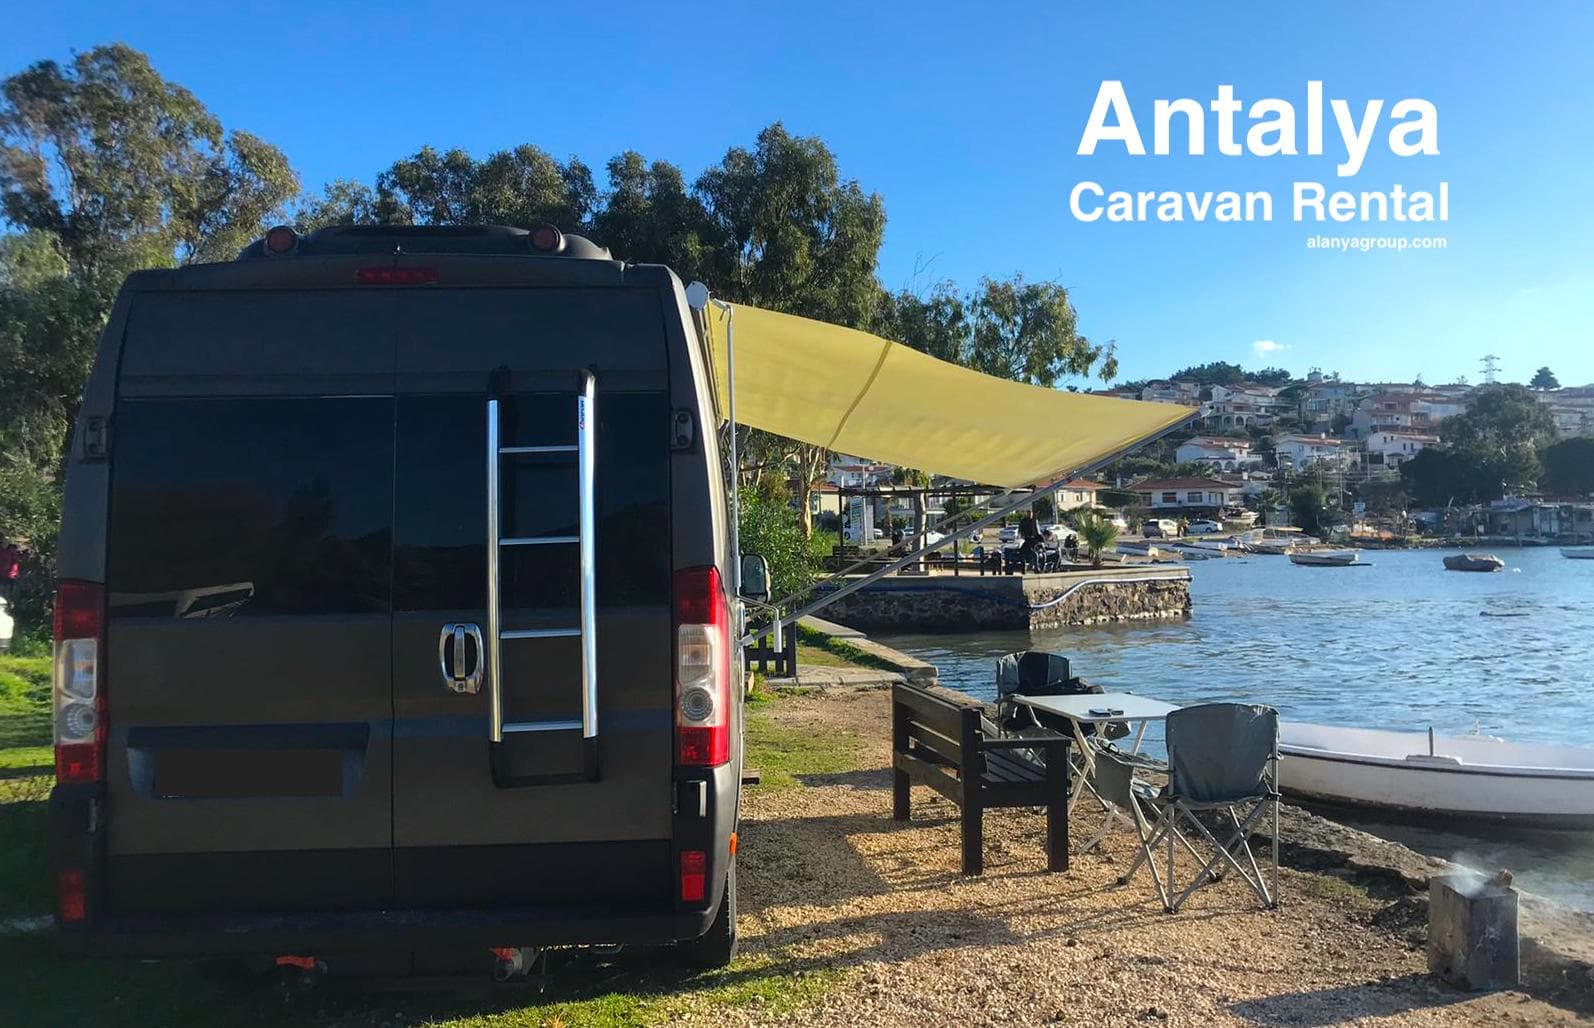 Antalya Caravan Rental